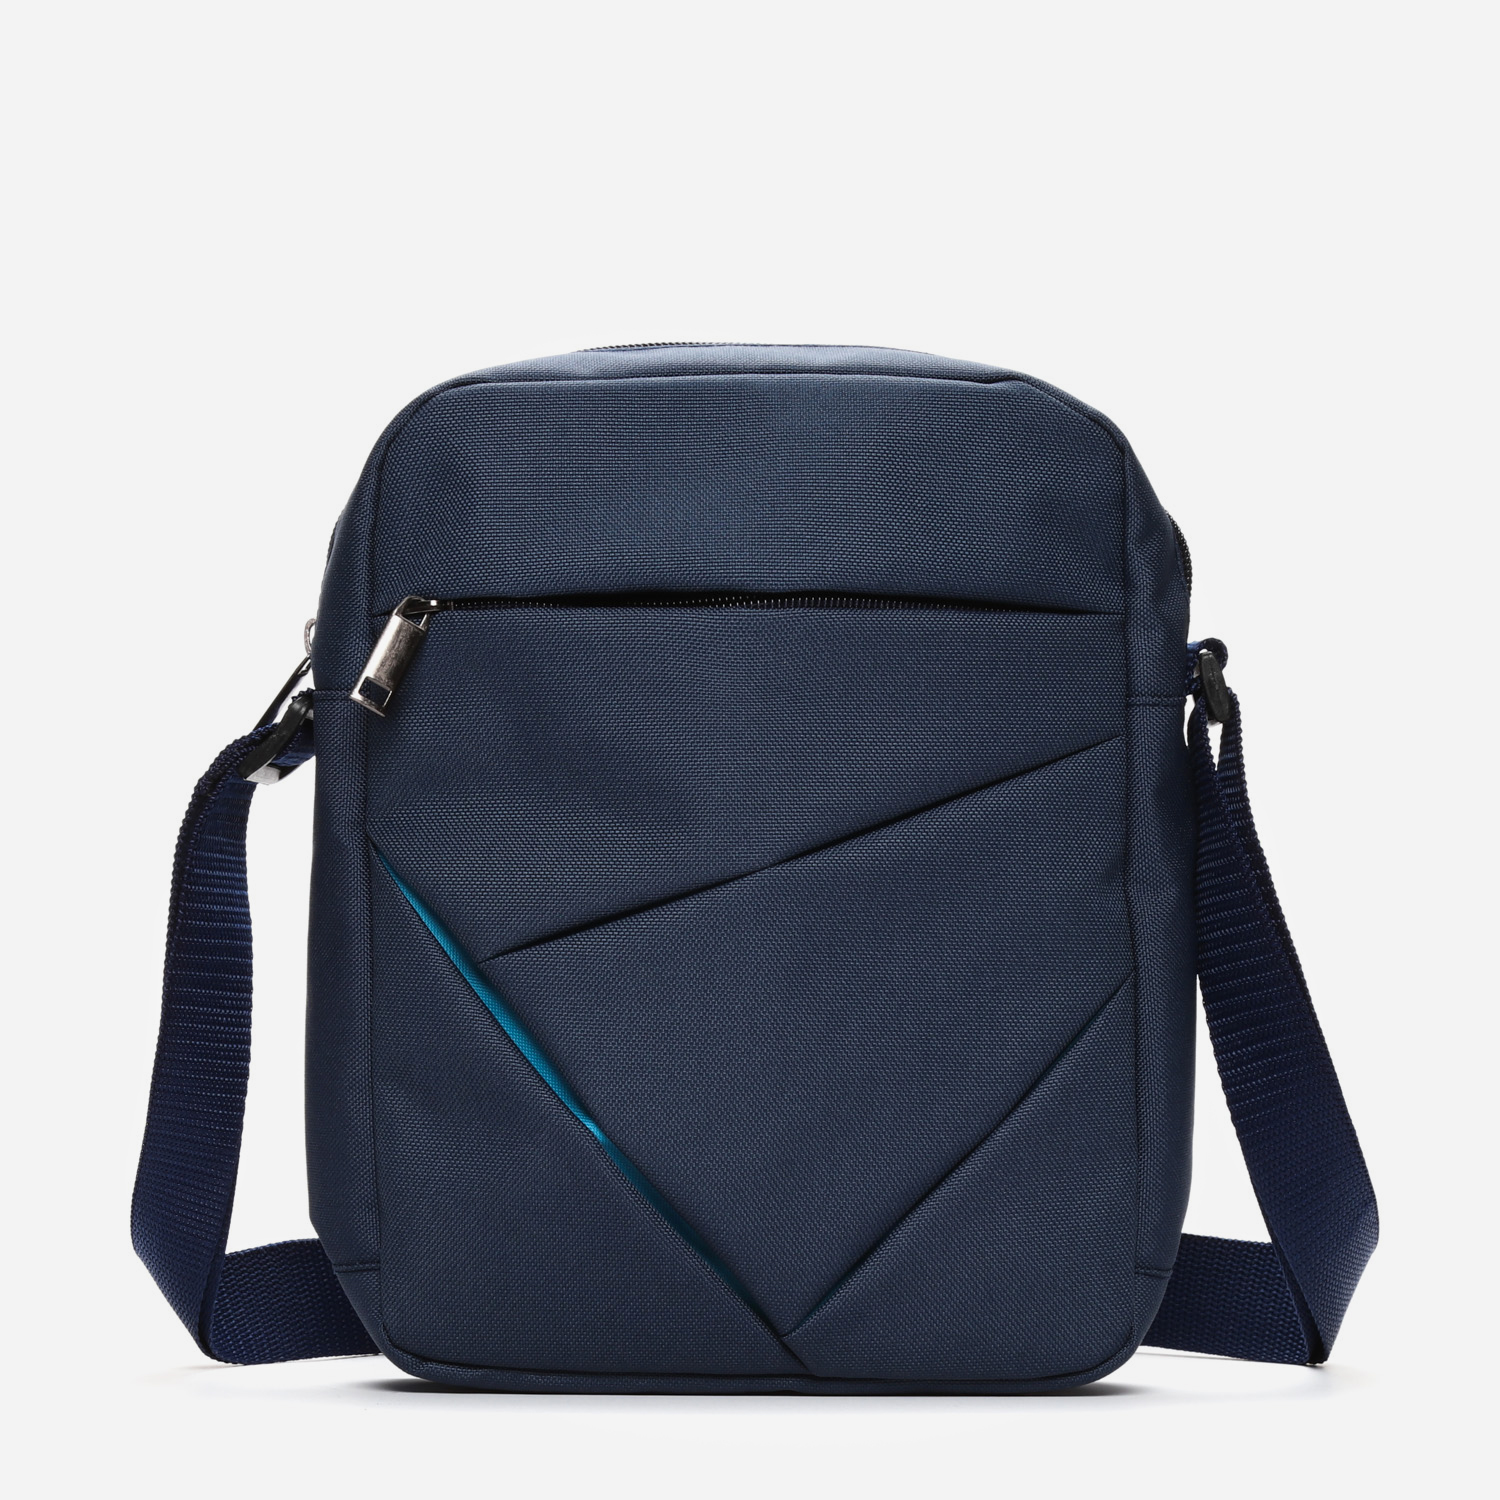 msense sling bag